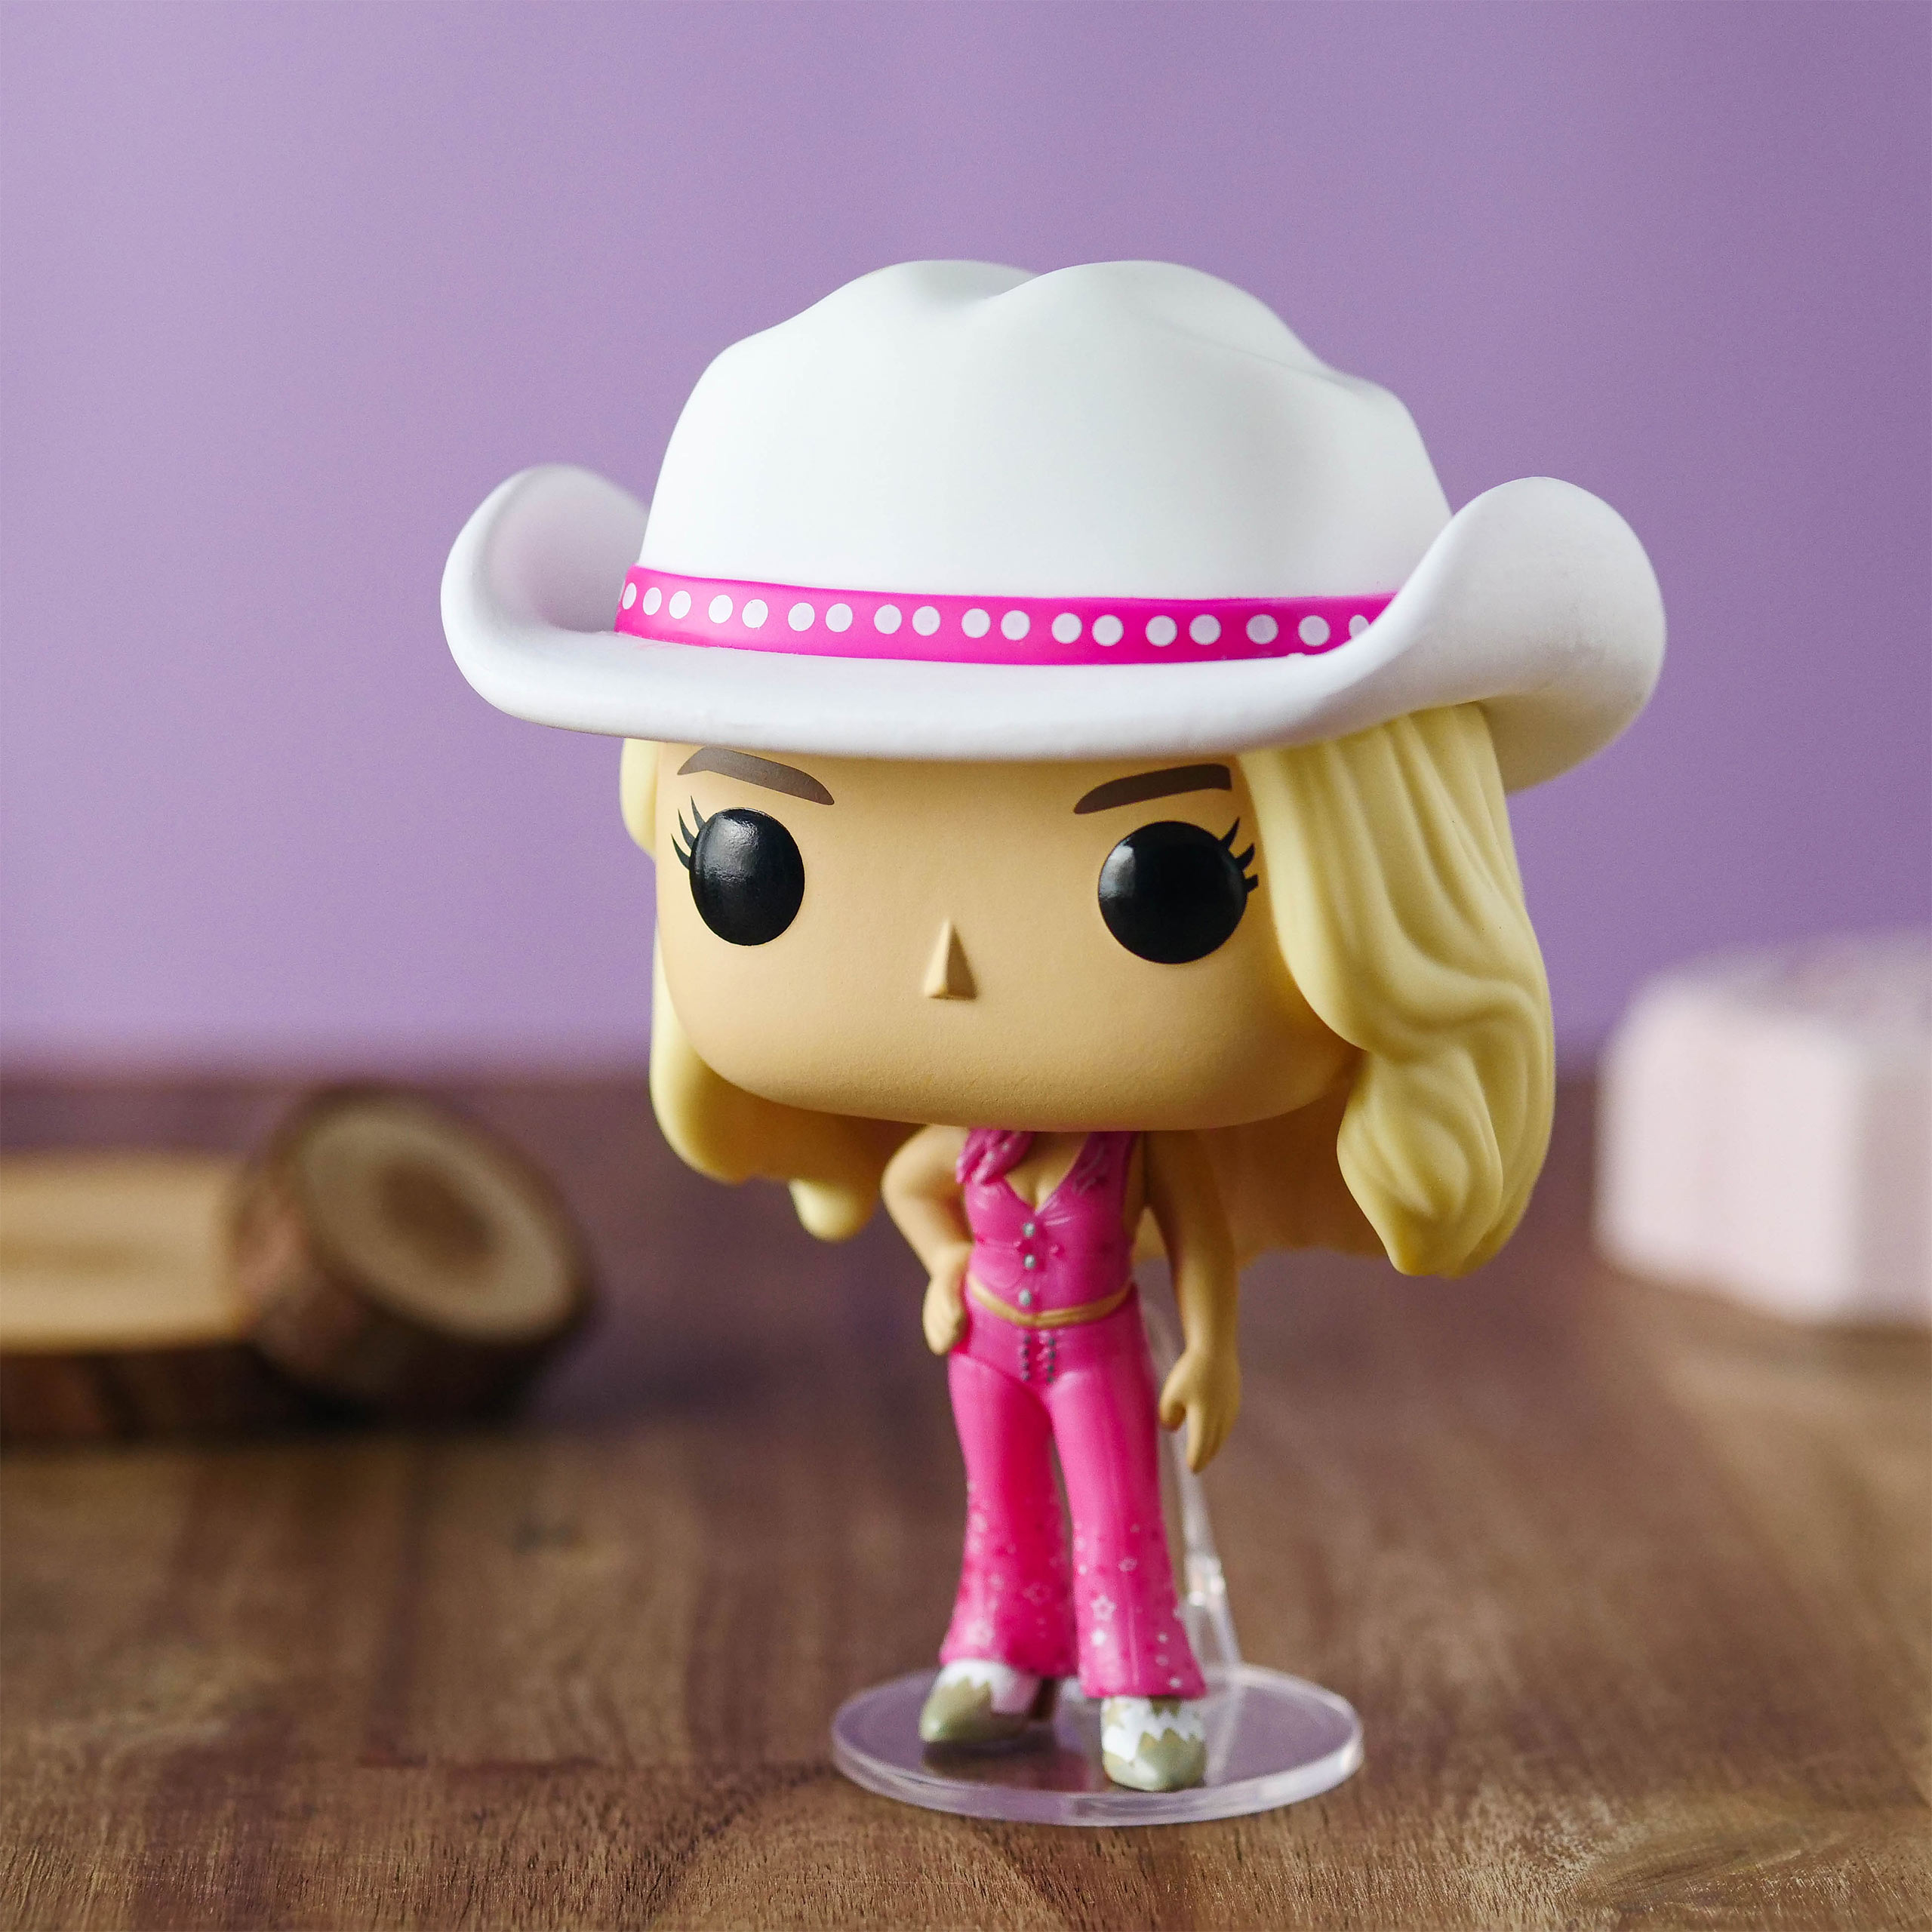 Barbie - Western Barbie Funko Pop Figur